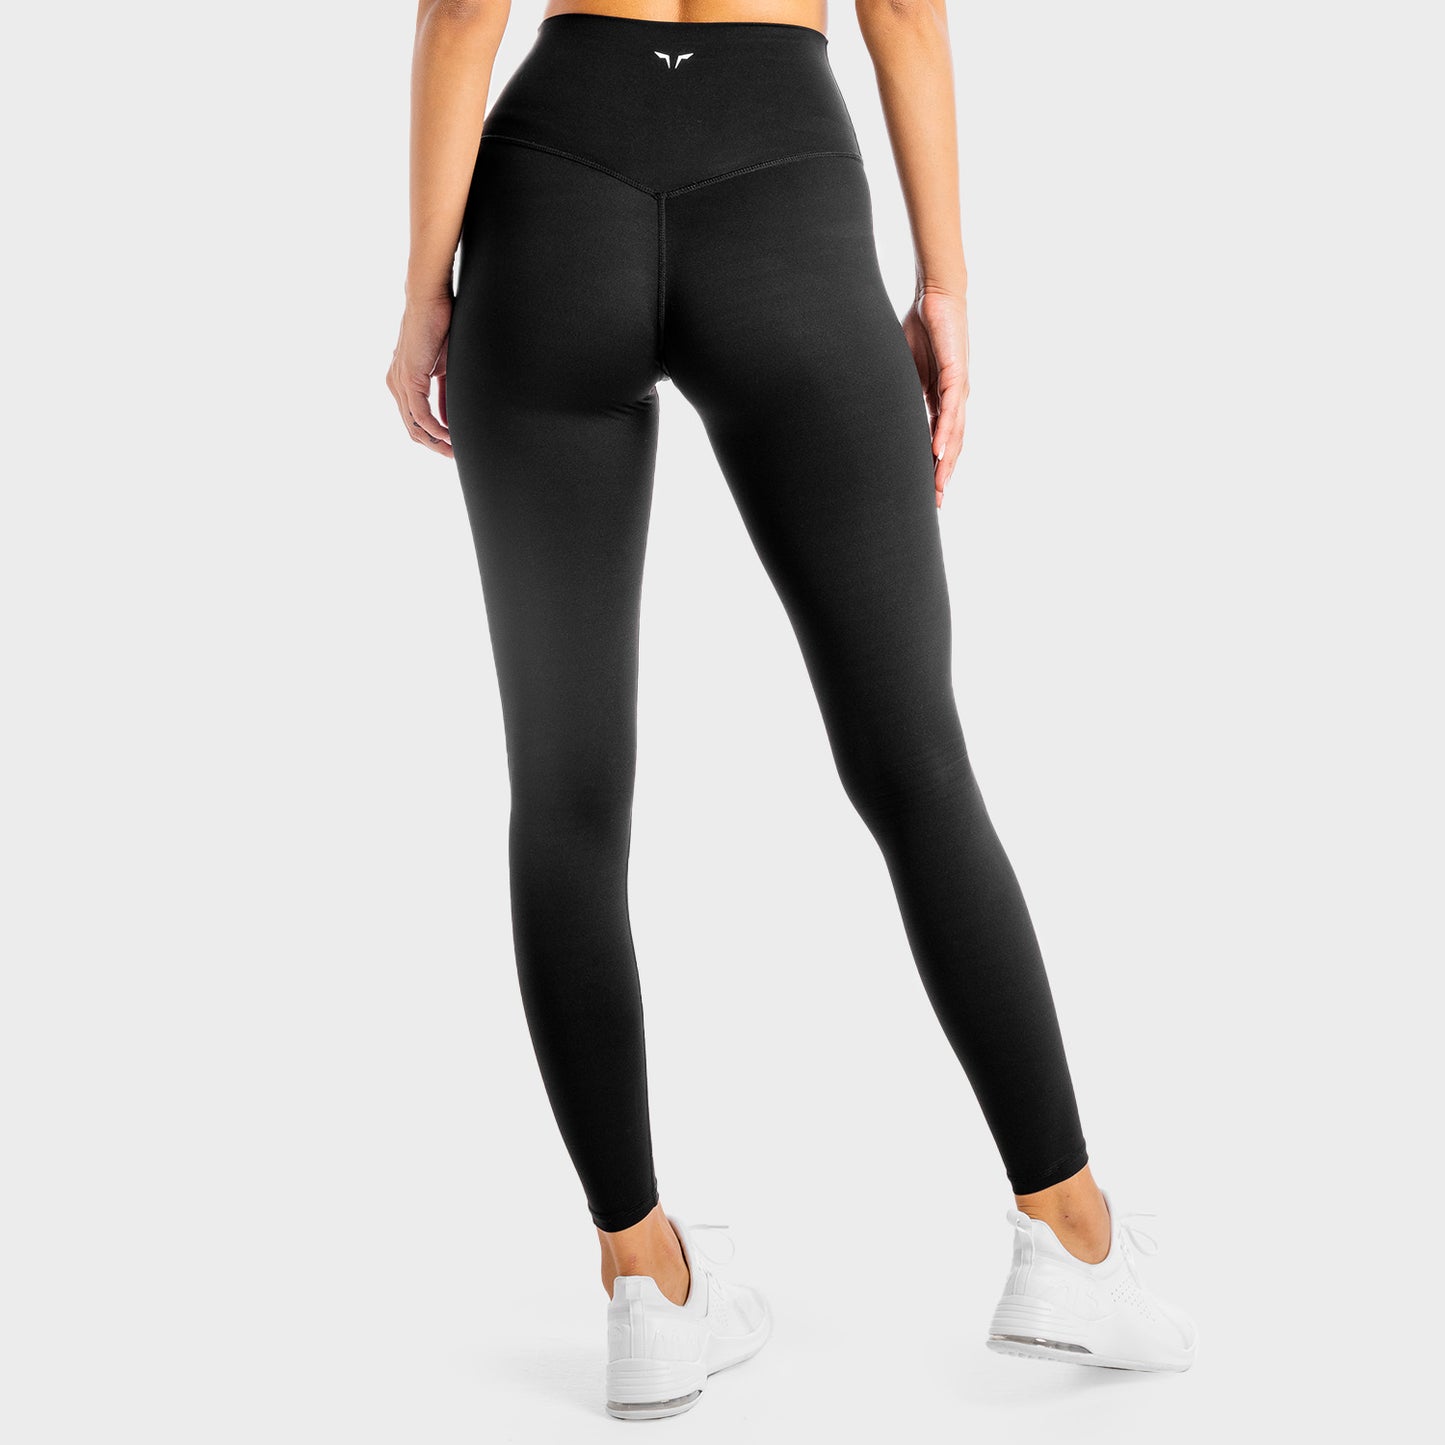 squatwolf-gym-leggings-for-women-core-agile-leggings-black-workout-clothes